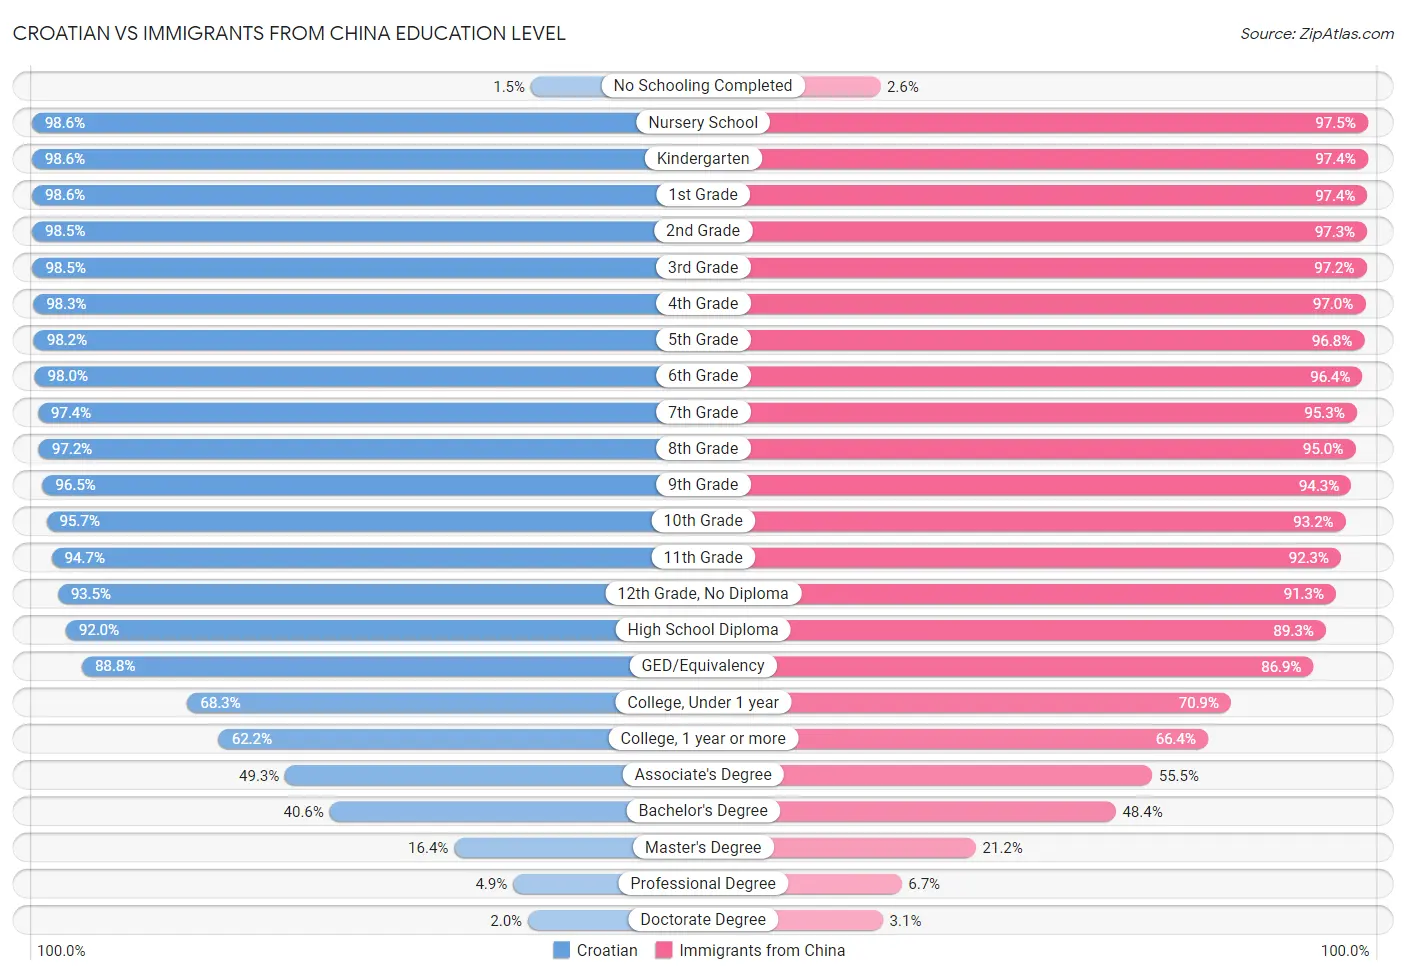 Croatian vs Immigrants from China Education Level